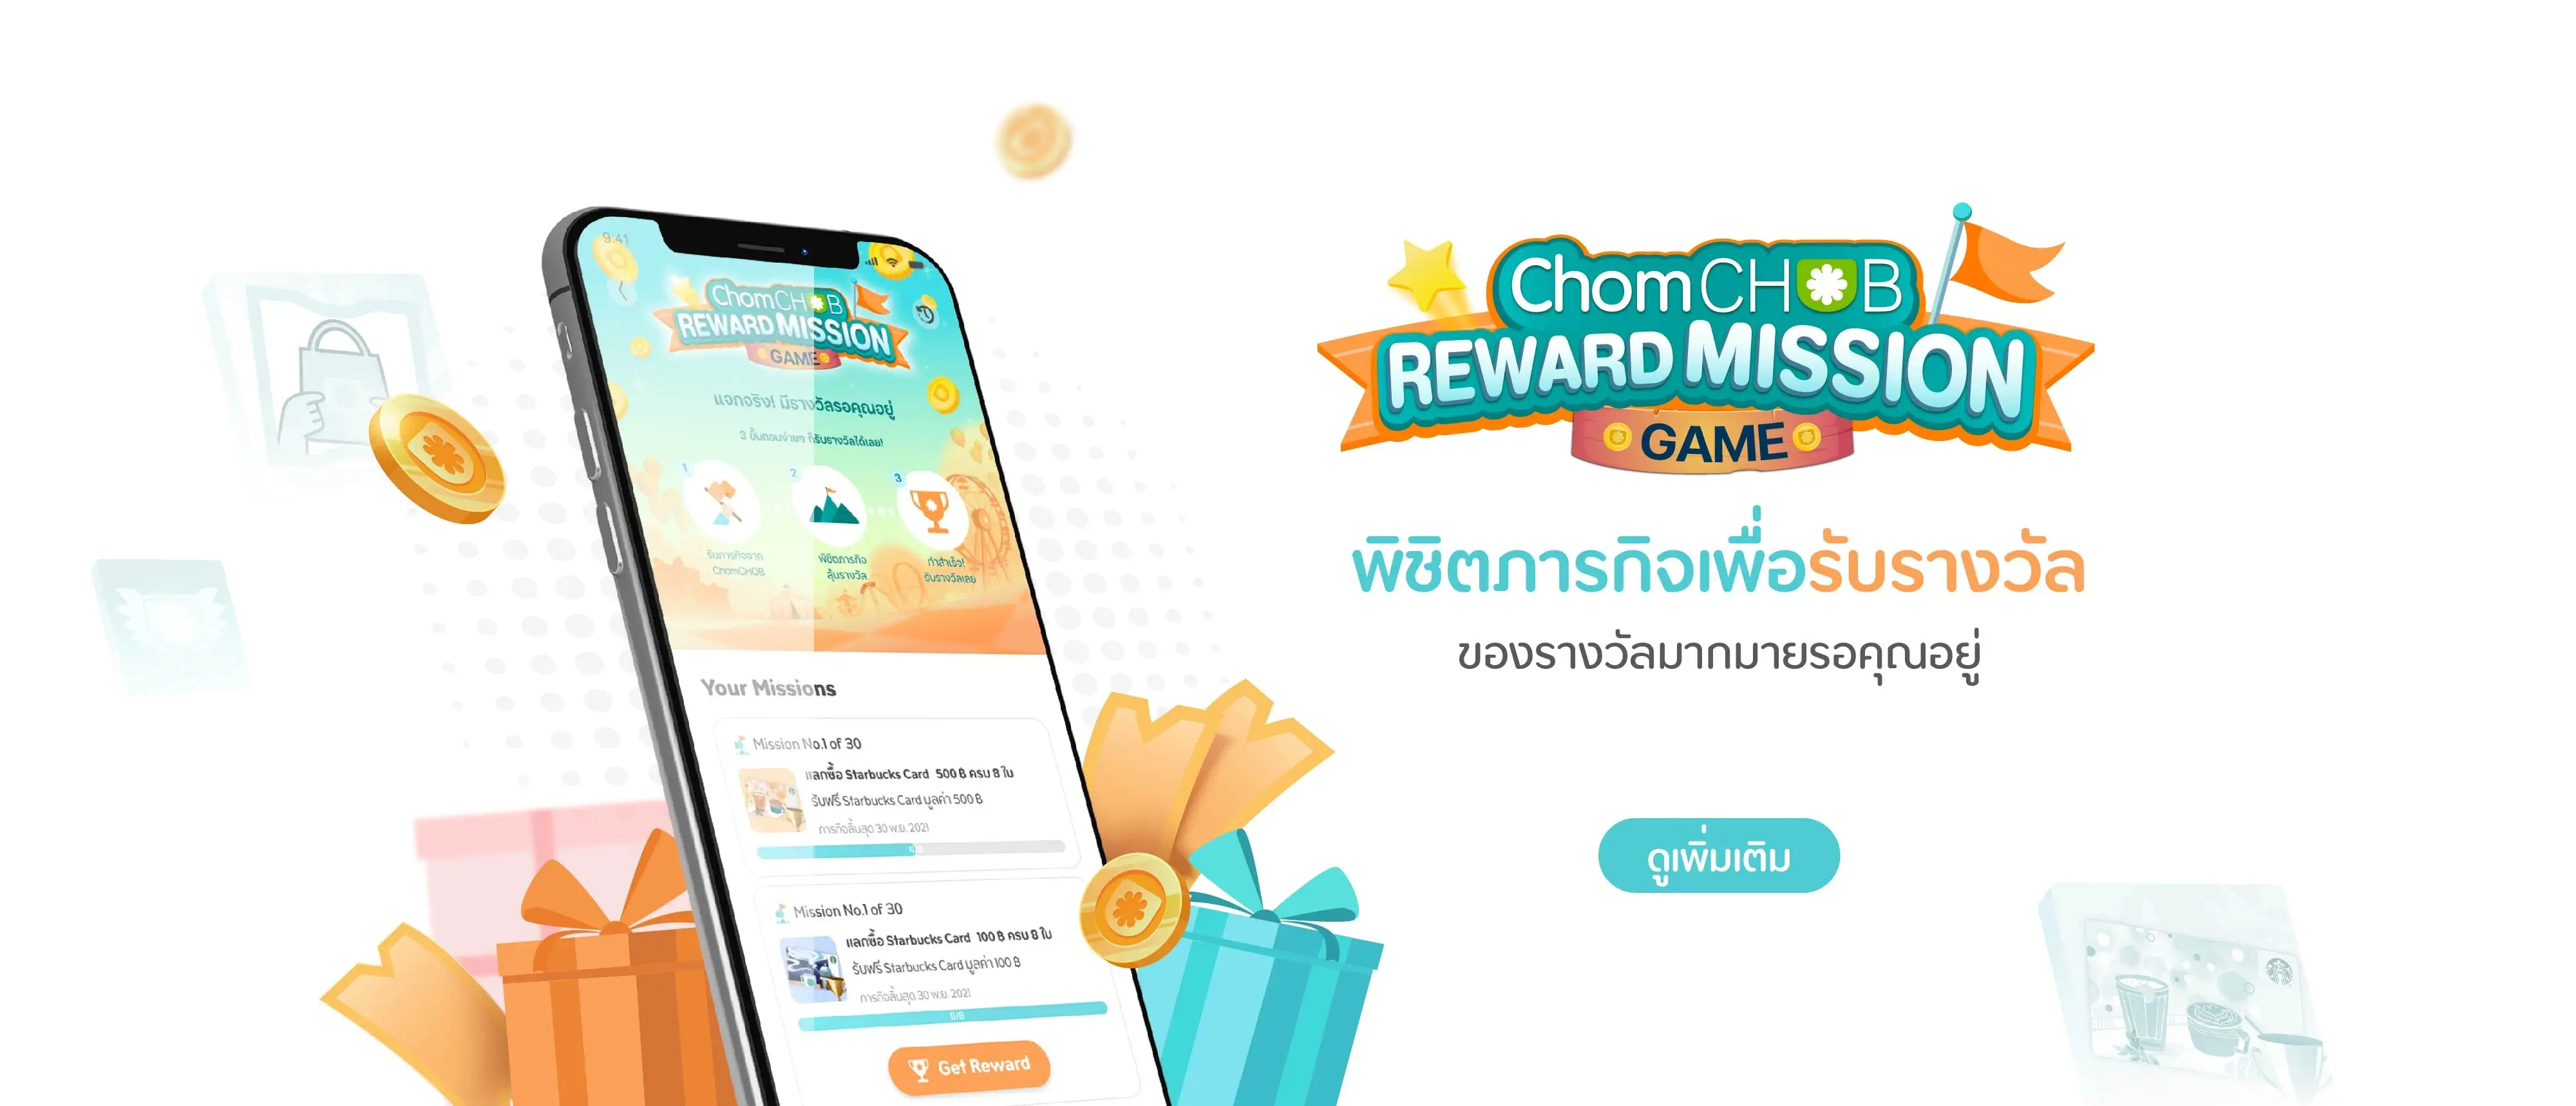 chomchob-mission-reward-large